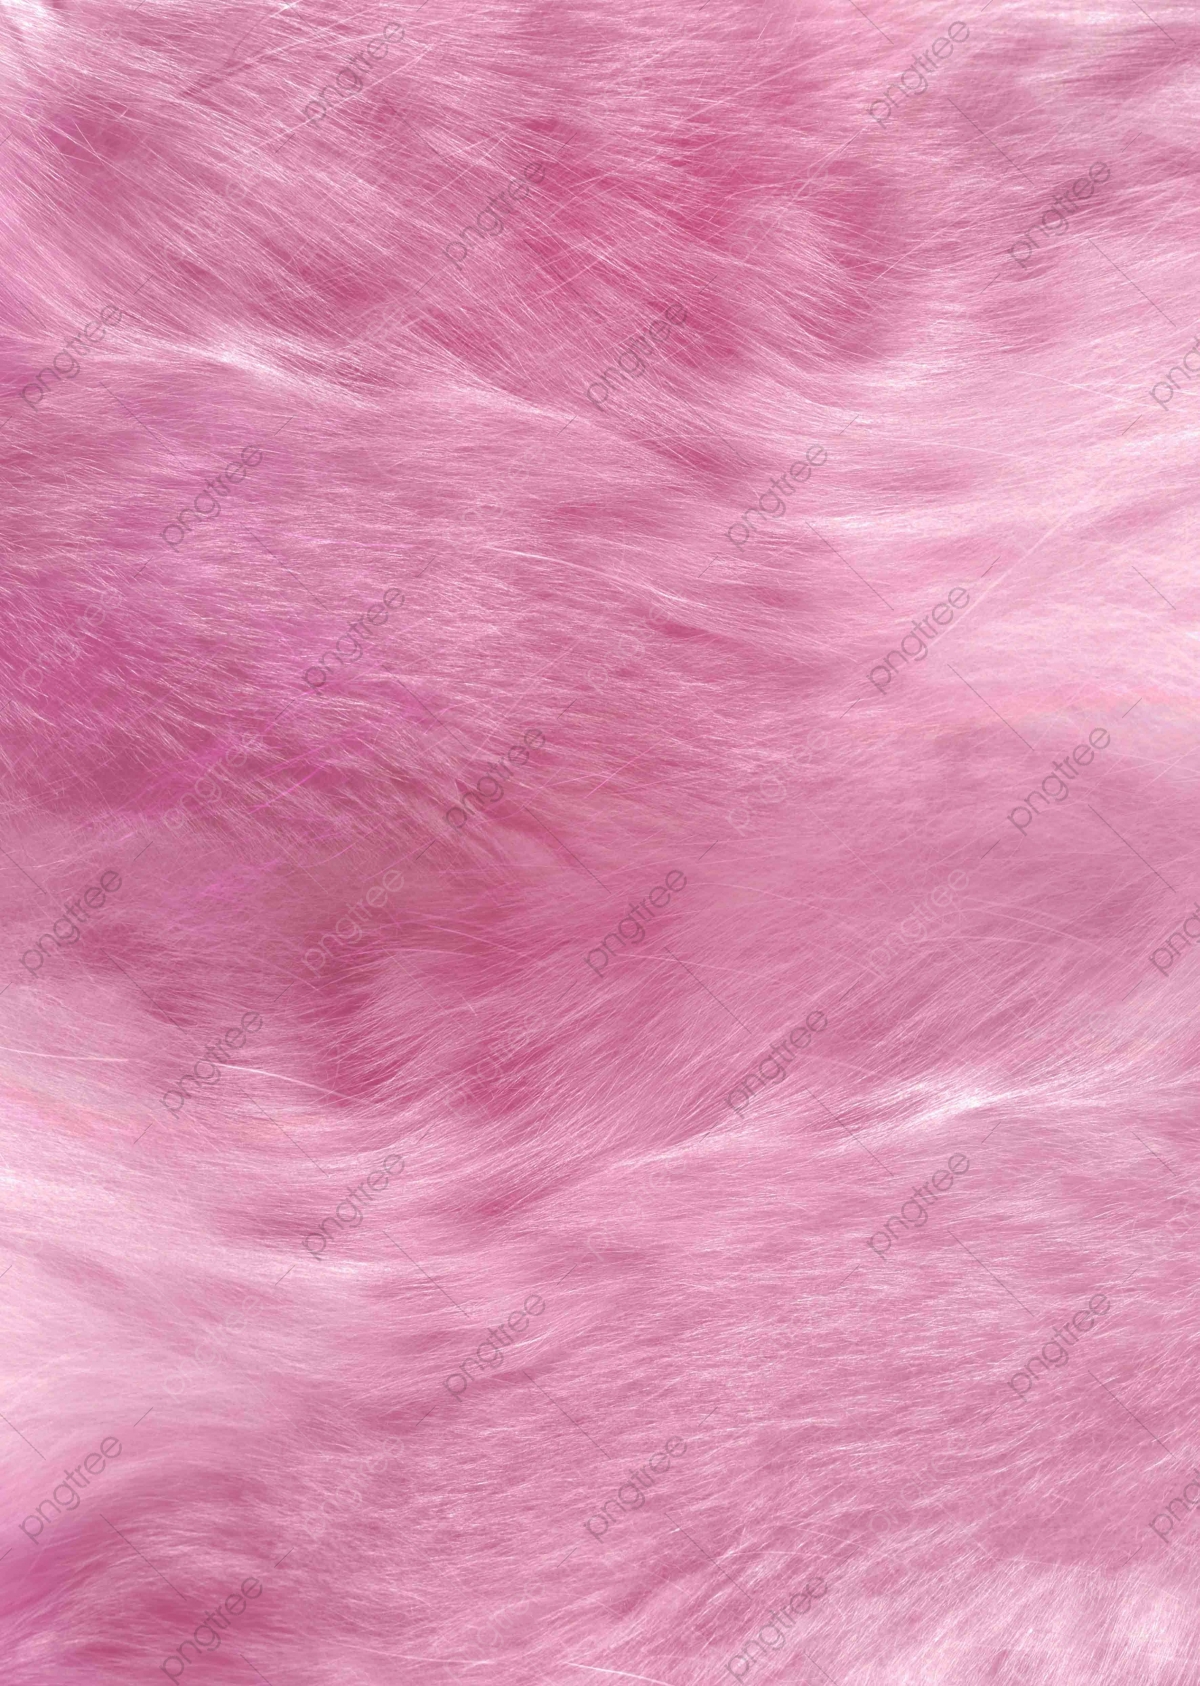 Pink Plush Silky Blanket Background, Pink, Blanket, Carpet Background Image for Free Download